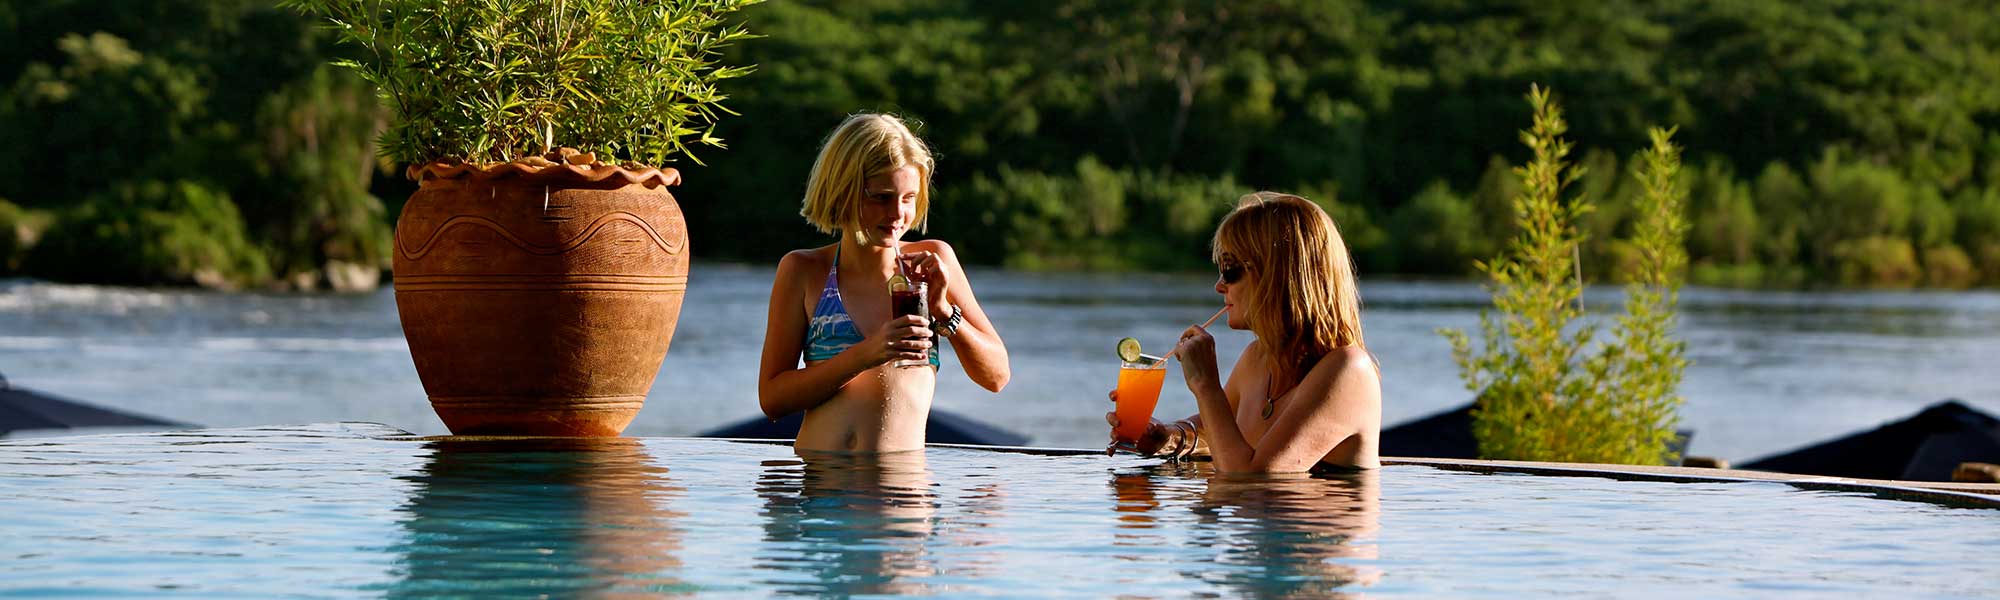 Luxury Lodges and Hotels on a Uganda Safari. Exquisite Accommodations for a Memorable Uganda Luxury Safari